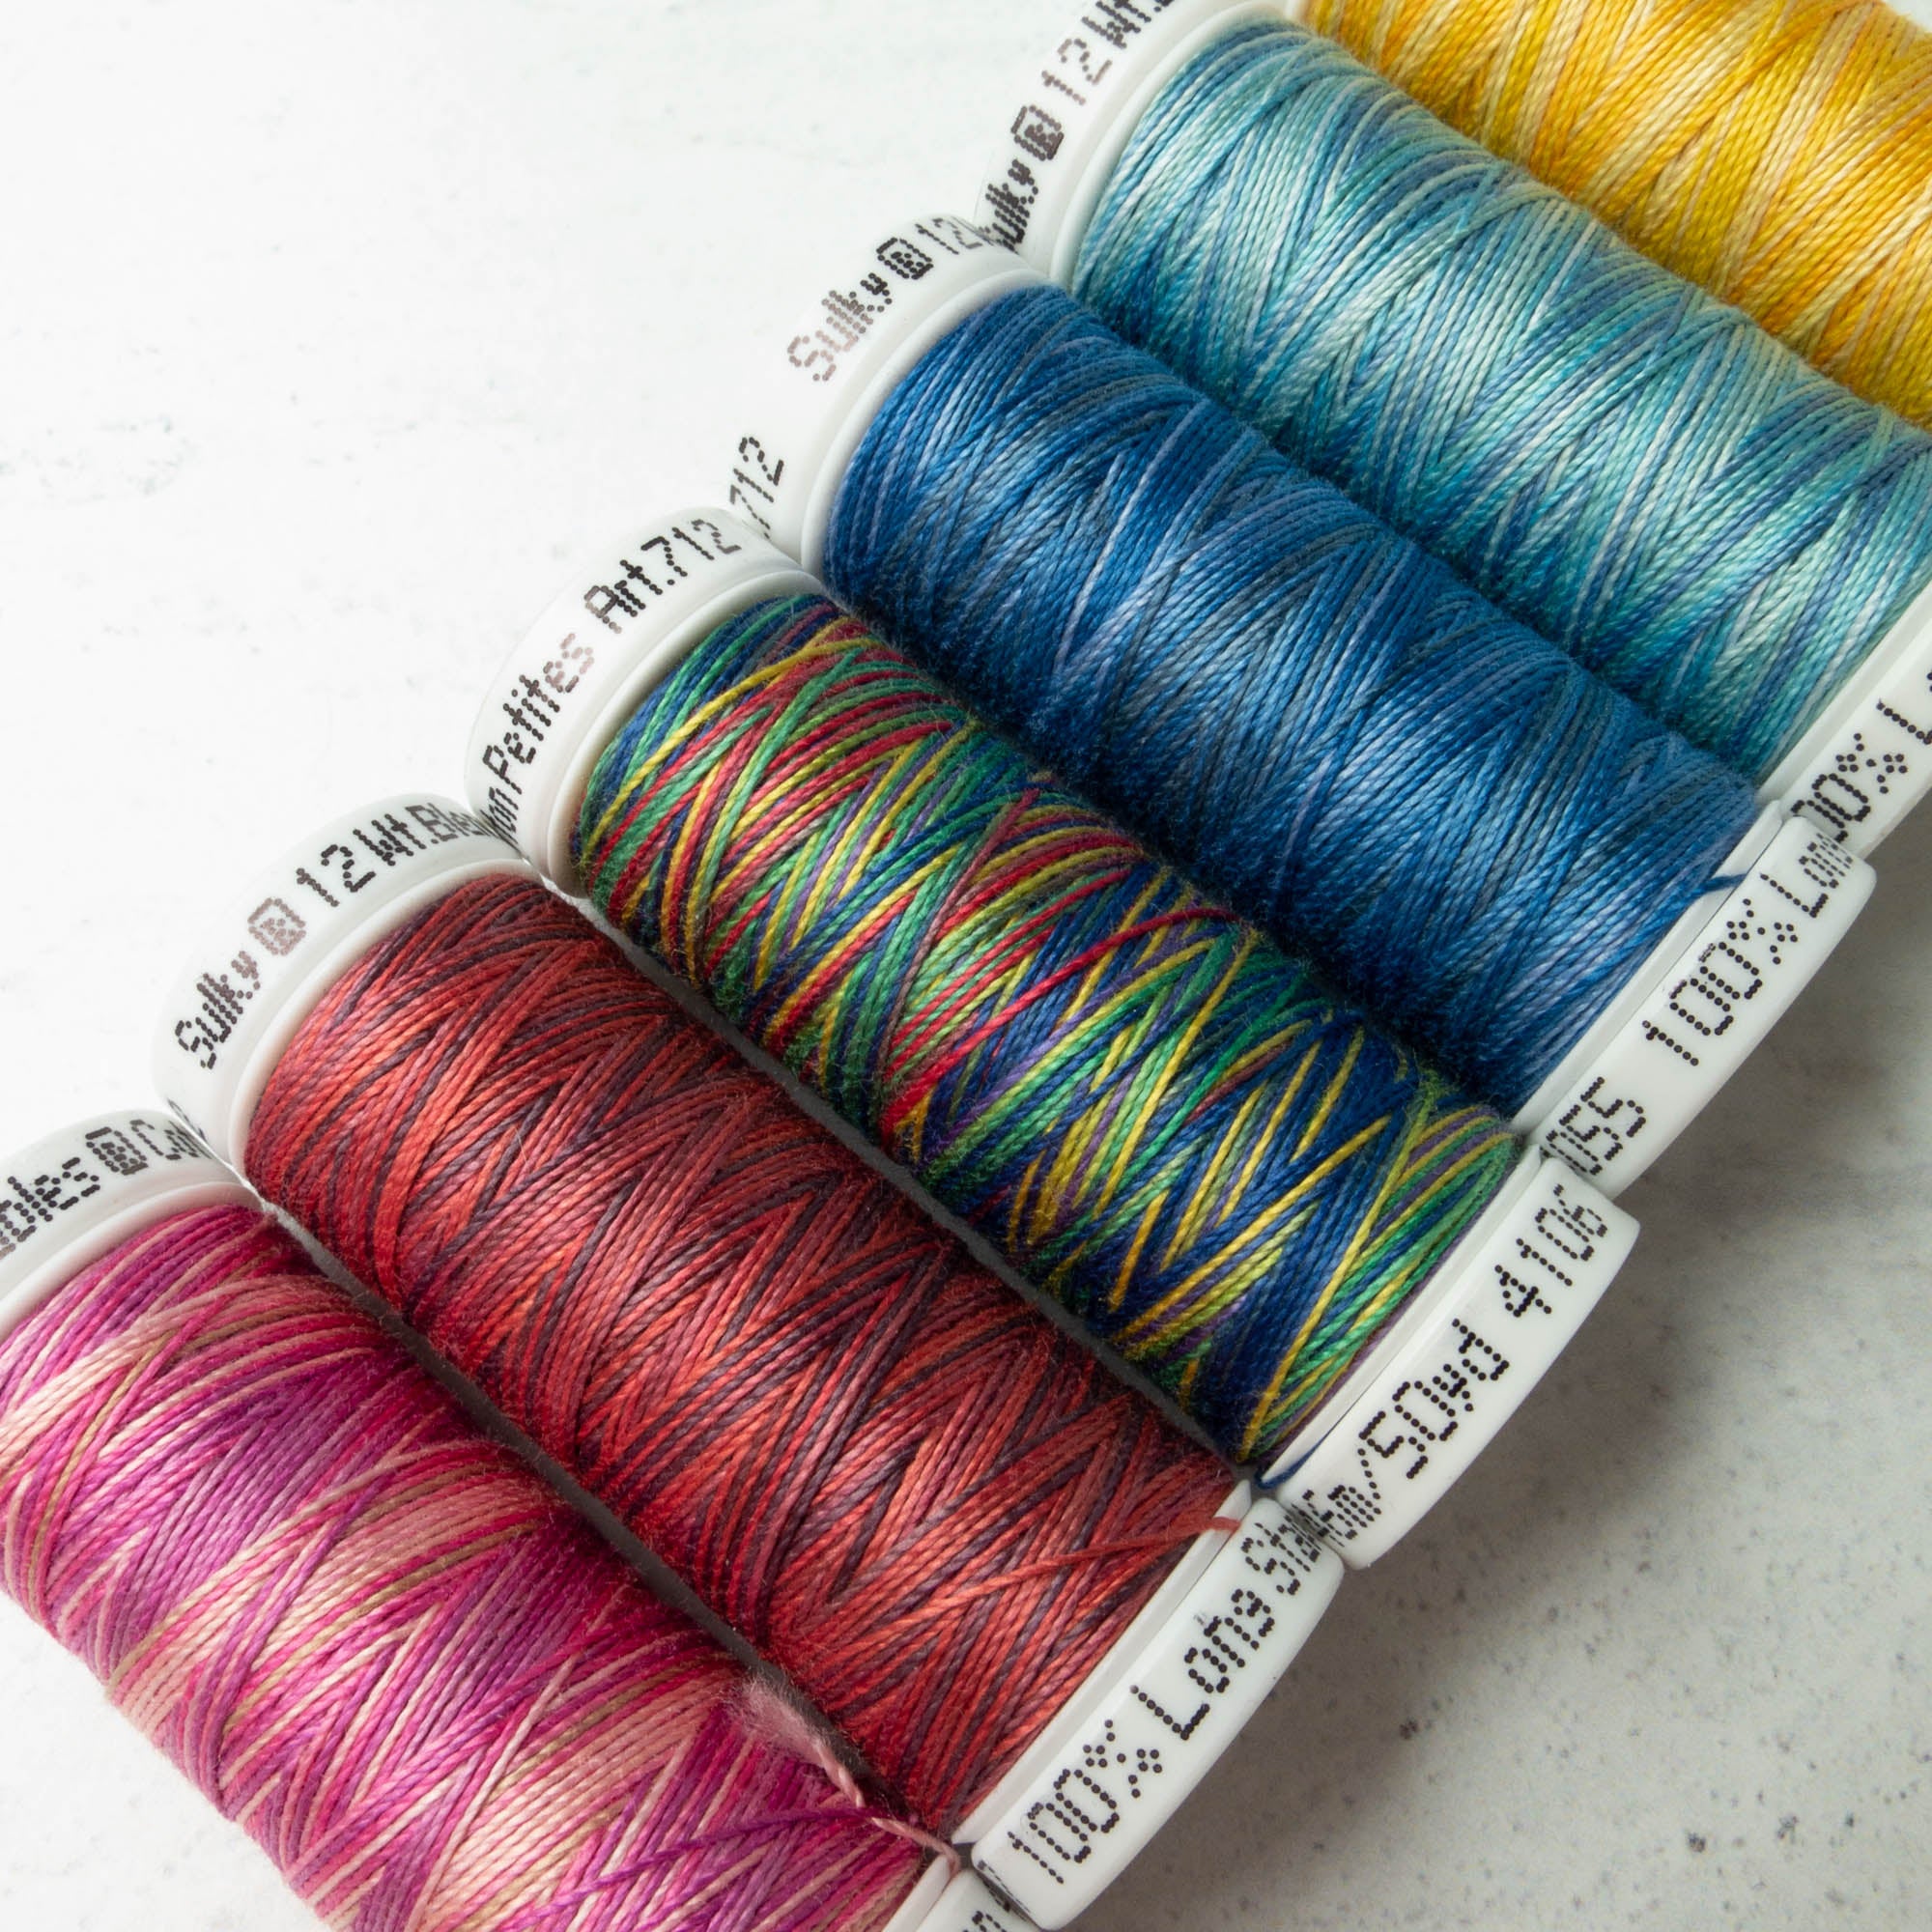 Sewing Thread Assortment Cotton Spools Thread Set 24 Colors 1000